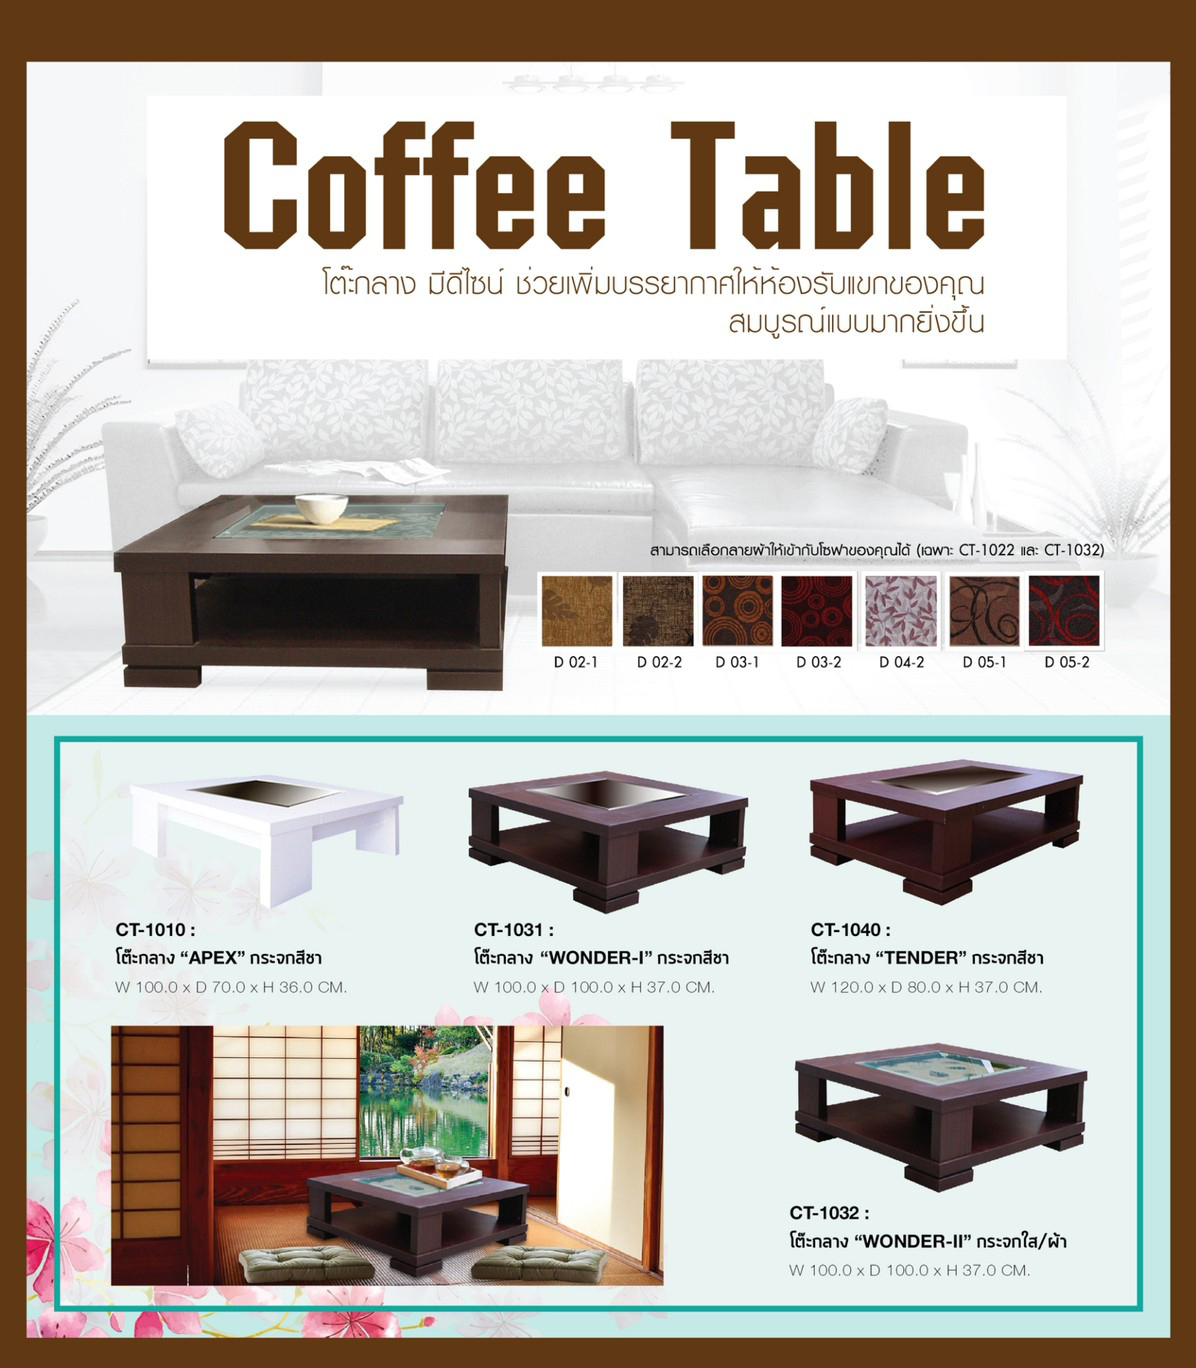 98054::CT1040::A Sure sofa table. Dimension (WxDxH) cm : 120x80x37. Available in Oak